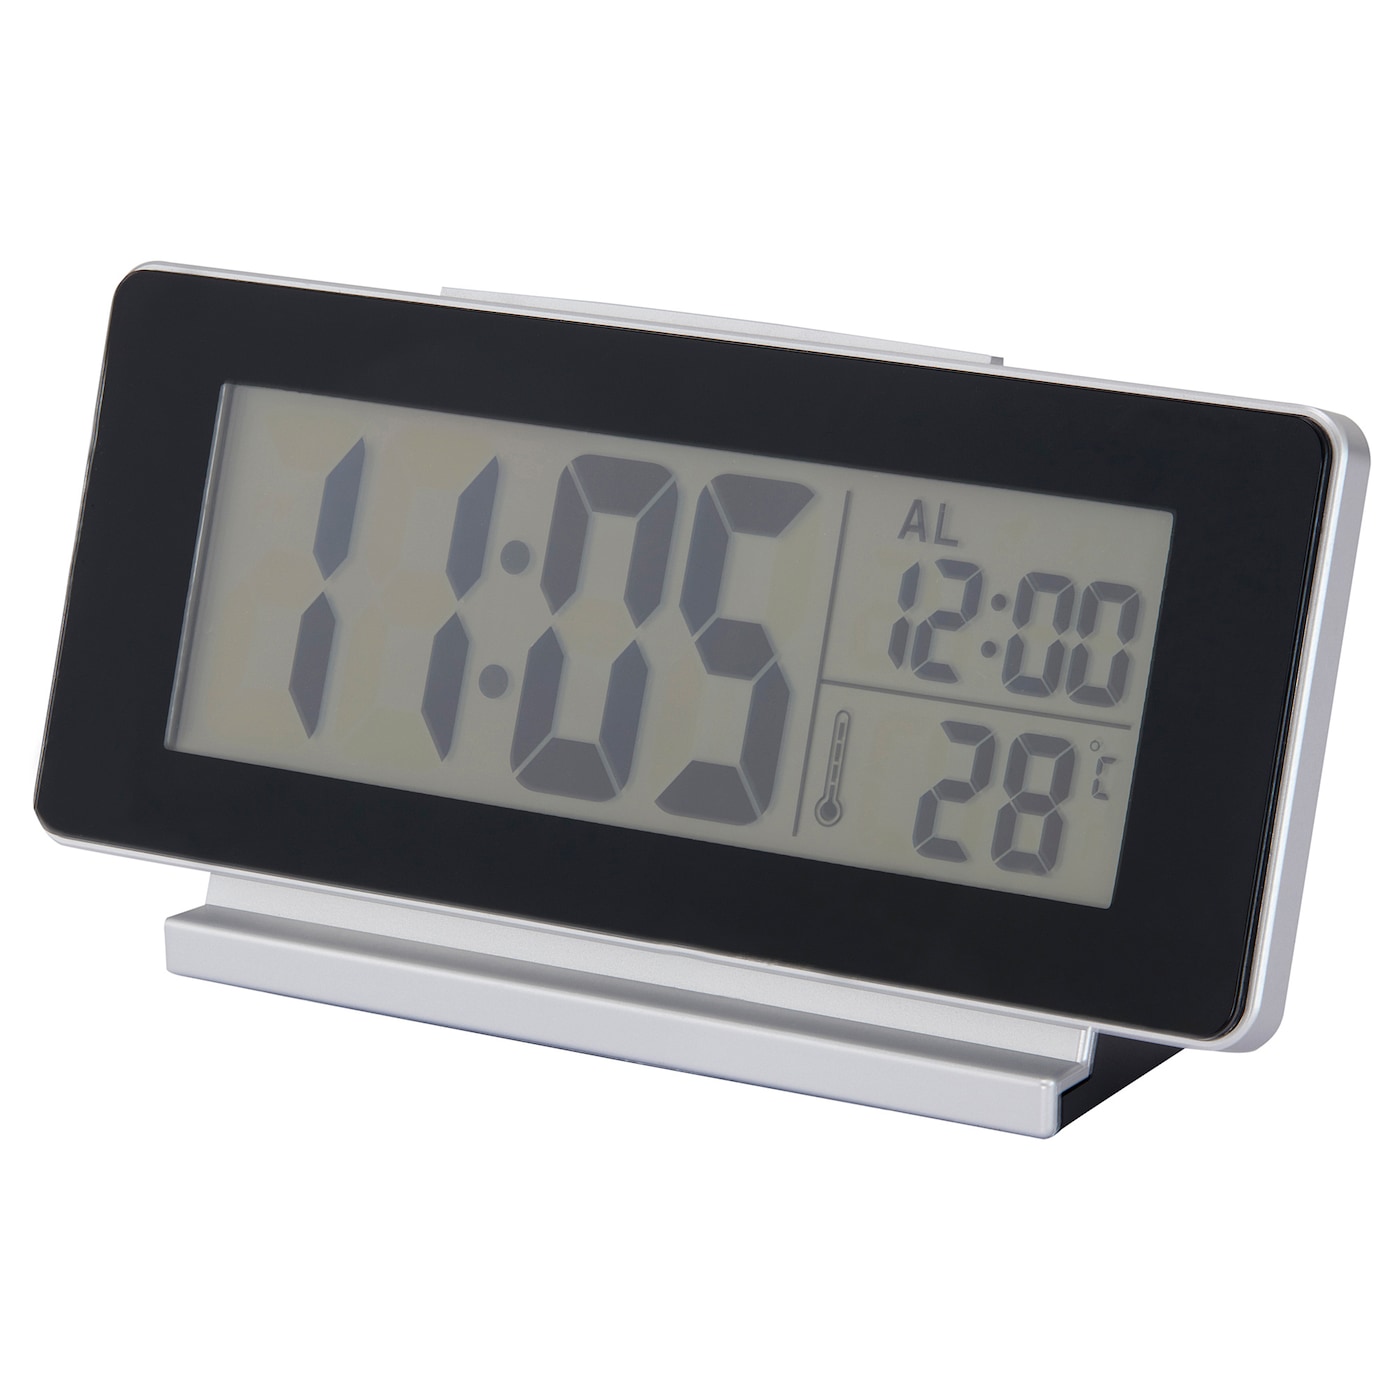 FILMIS Часы/термометр/будильник, низкое напряжение/черный, 16,5x9 см IKEA набор venom часы будильник фигурка